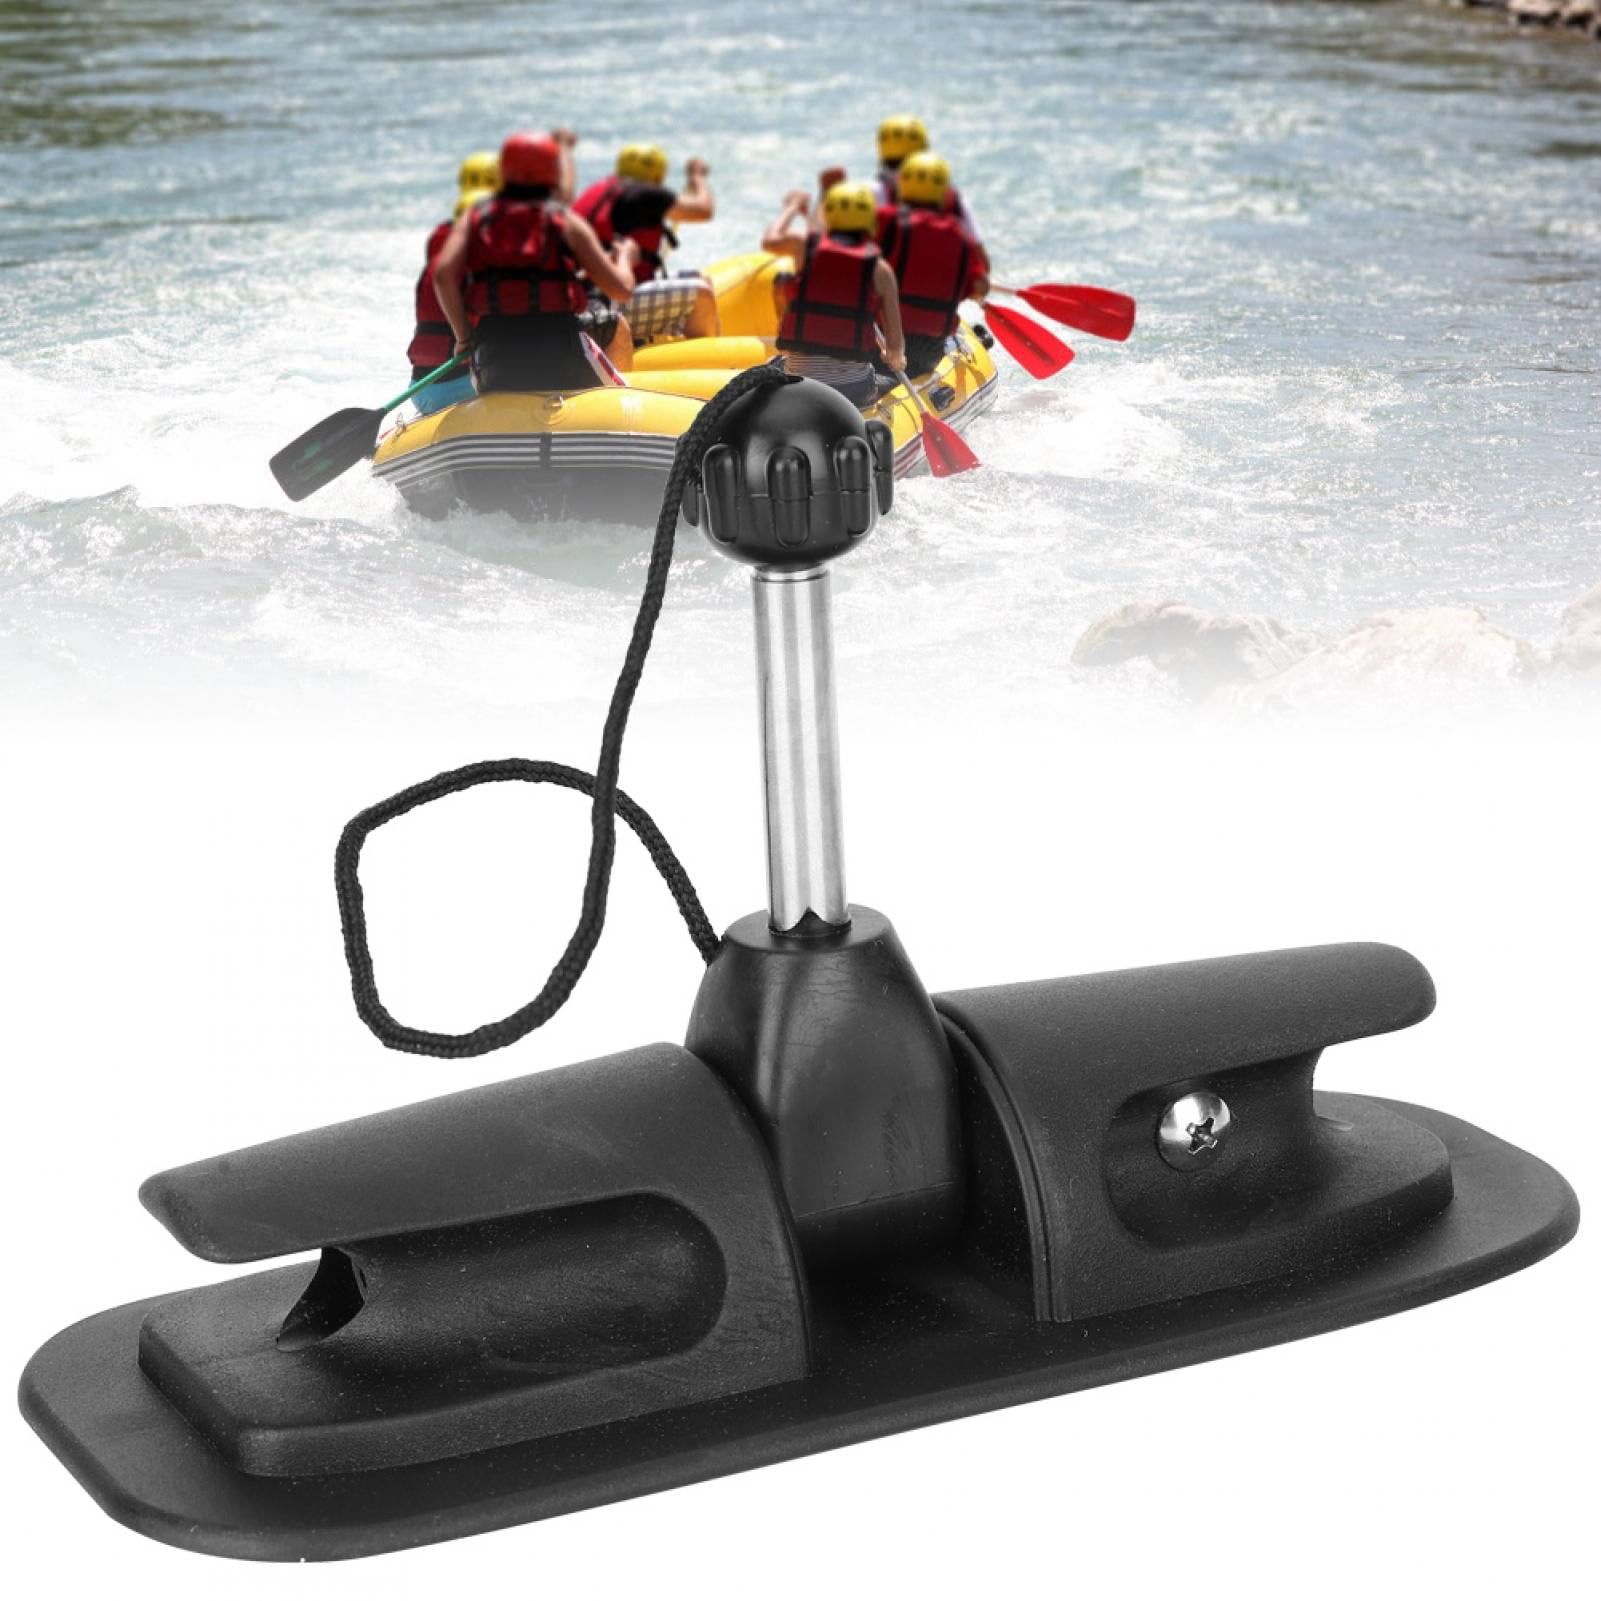 4Pcs Plastic Kayak Paddle Holder Clips Marine Boat Canoe Dinghy Oar Keeper Black 